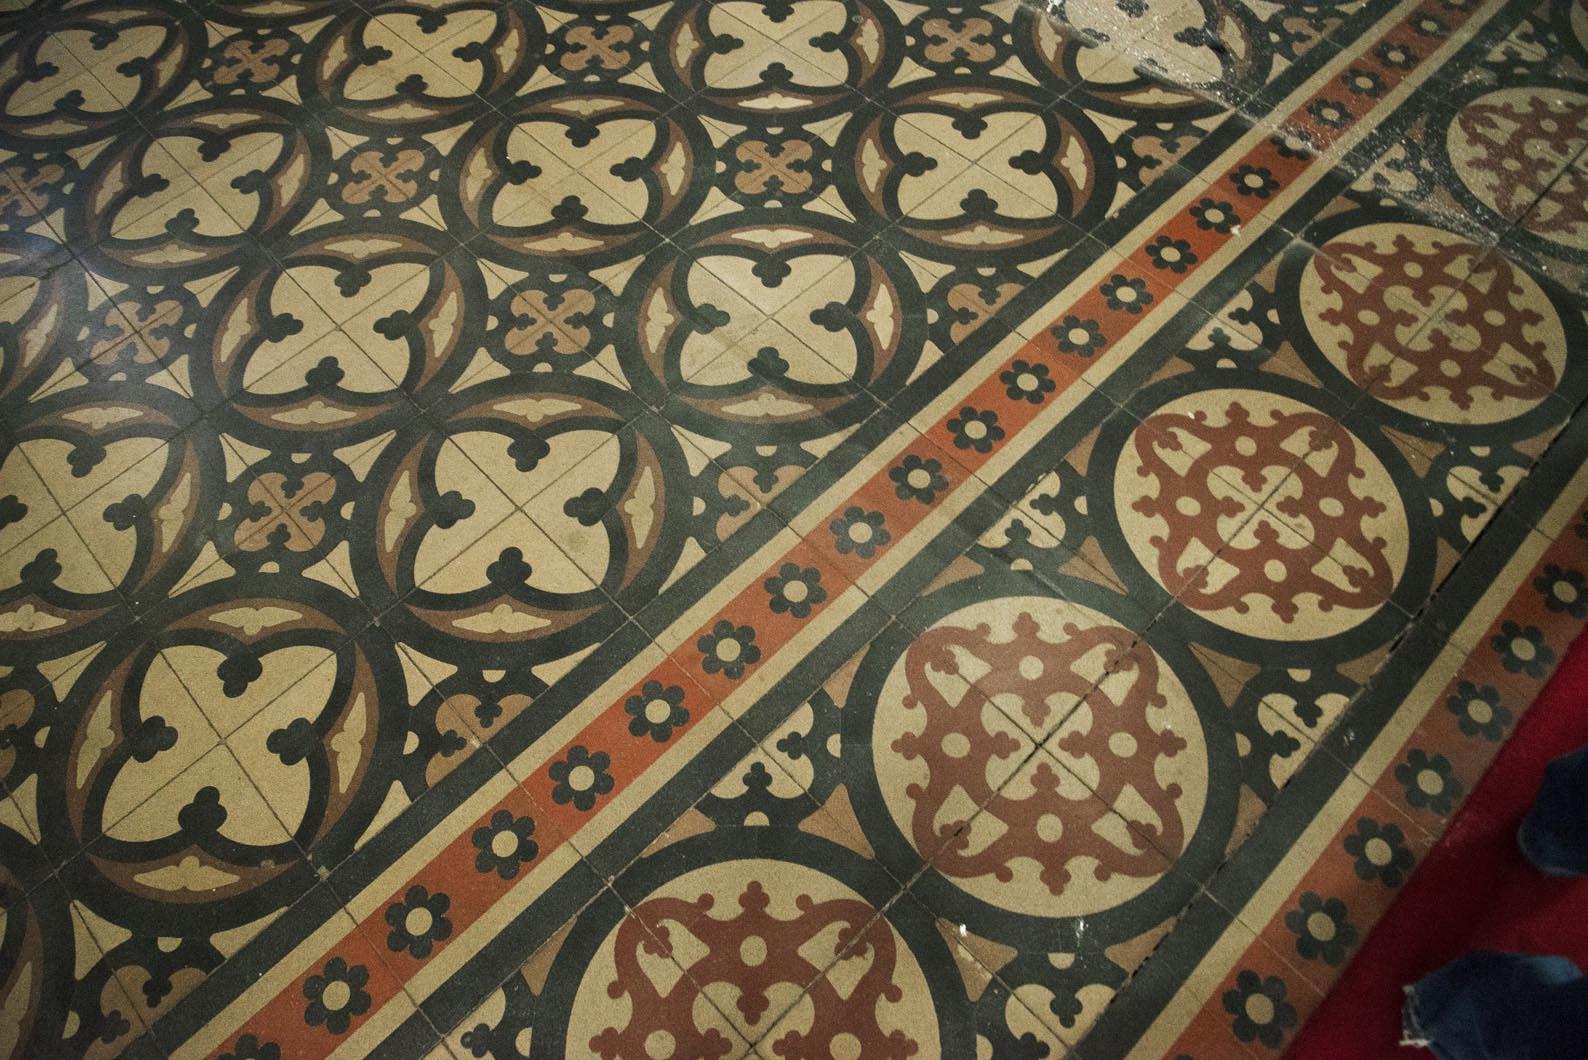 gothic tile floor